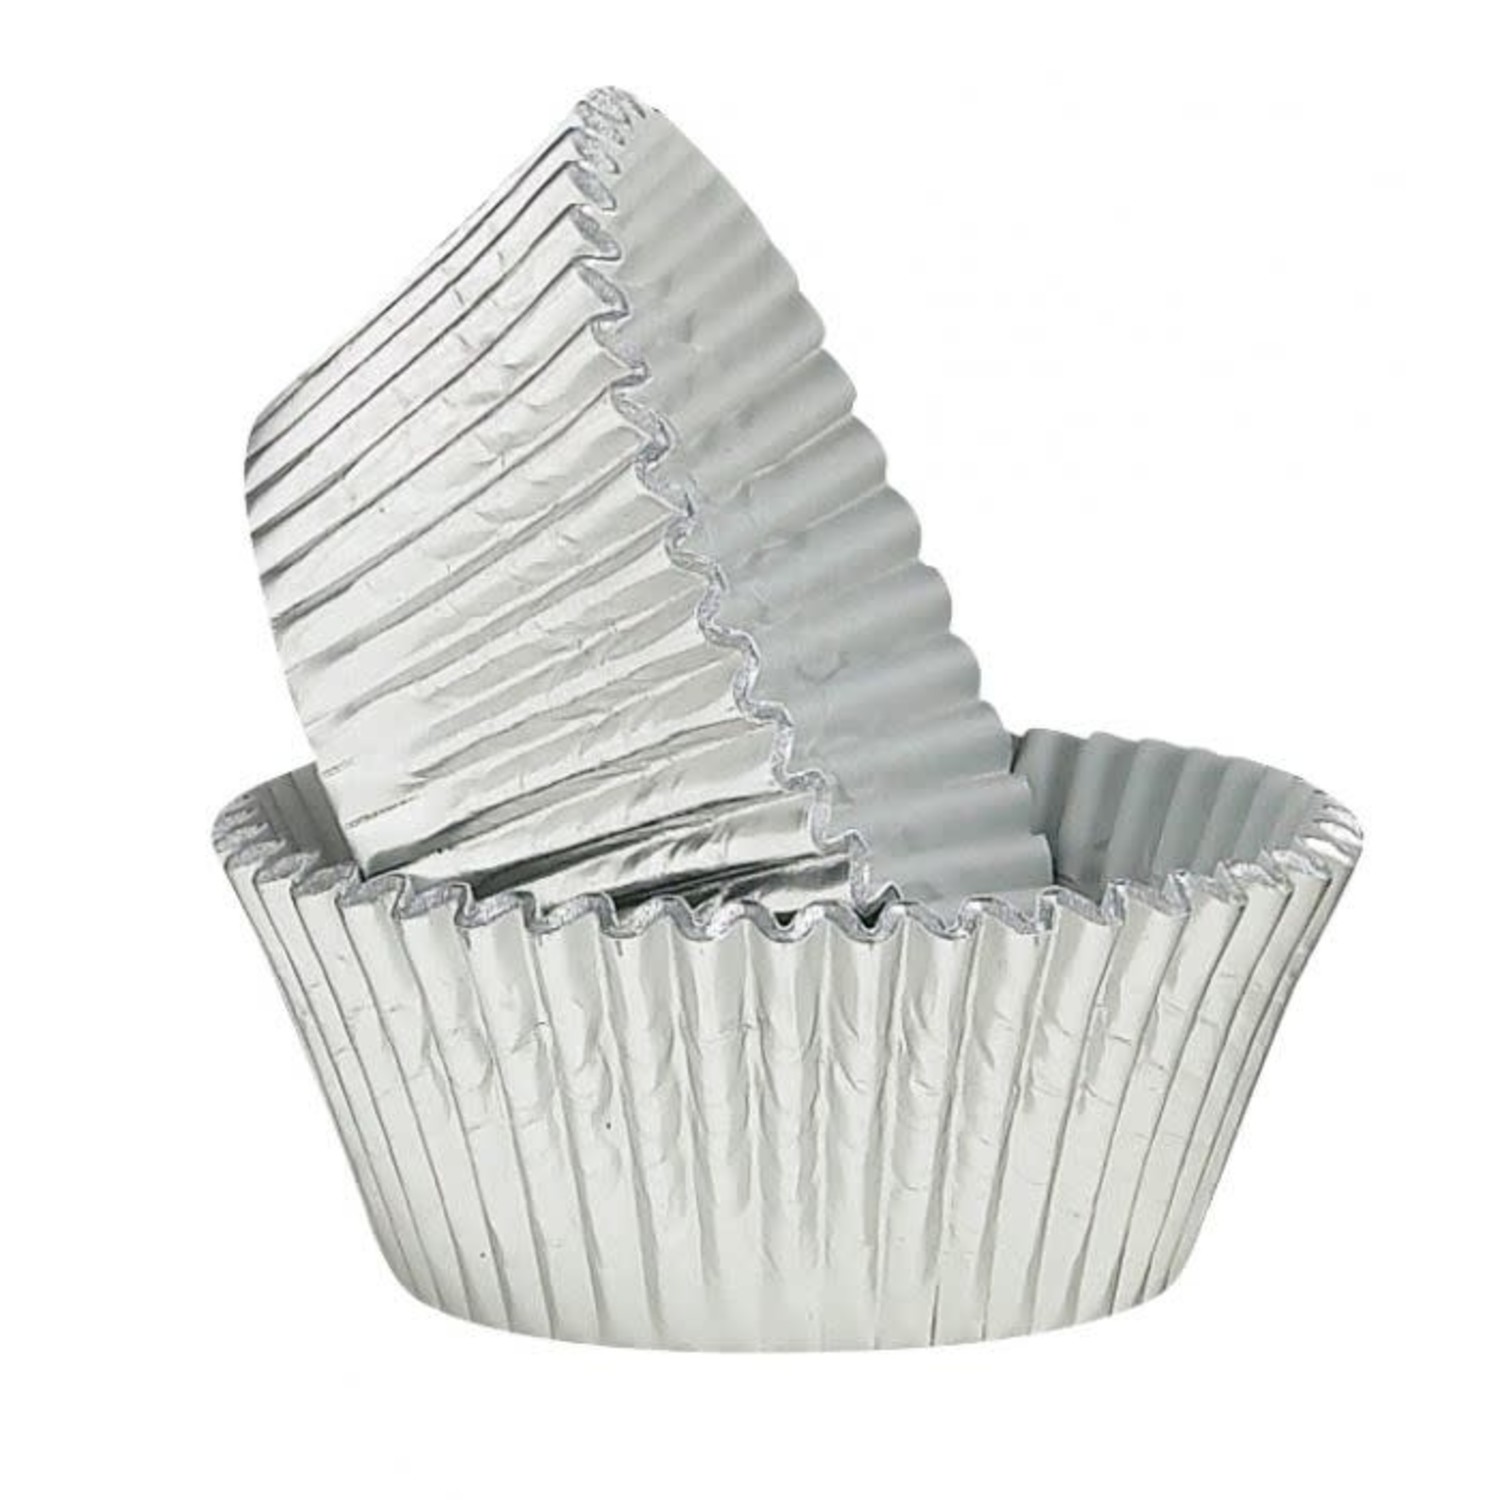 Foil Baking Cups - Whisk